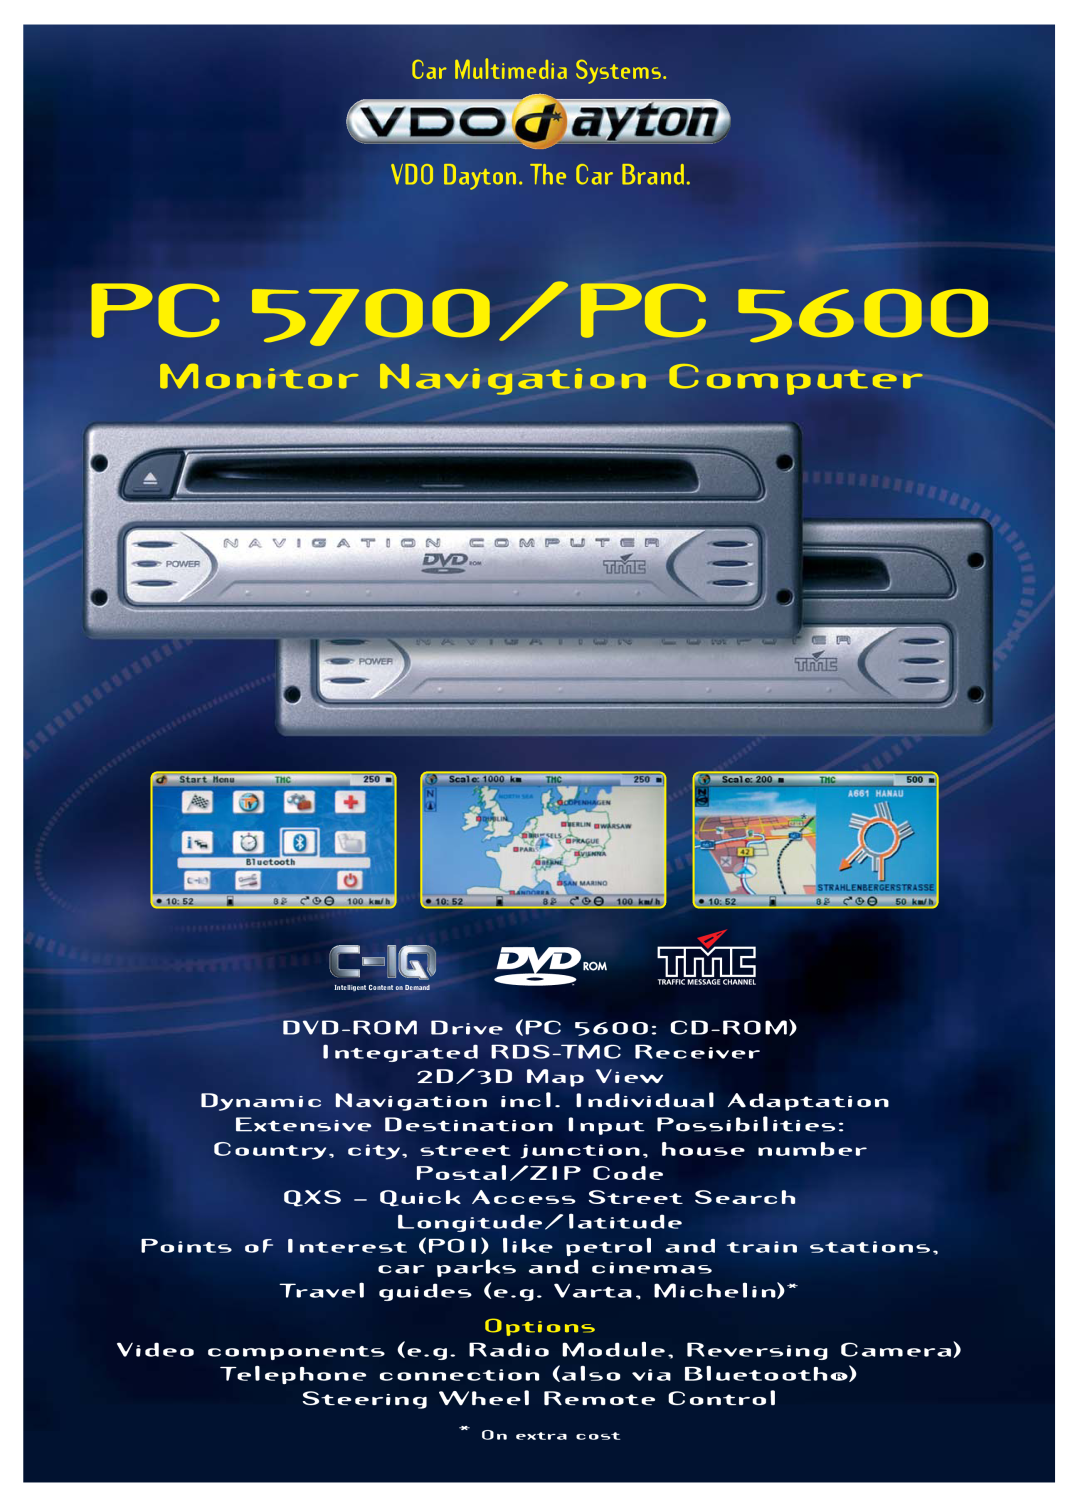 VDO Dayton PC 5600 manual PC 5700/PC, Monitor Navigation Computer, VDO Dayton. The Car Brand, Car Multimedia Systems 